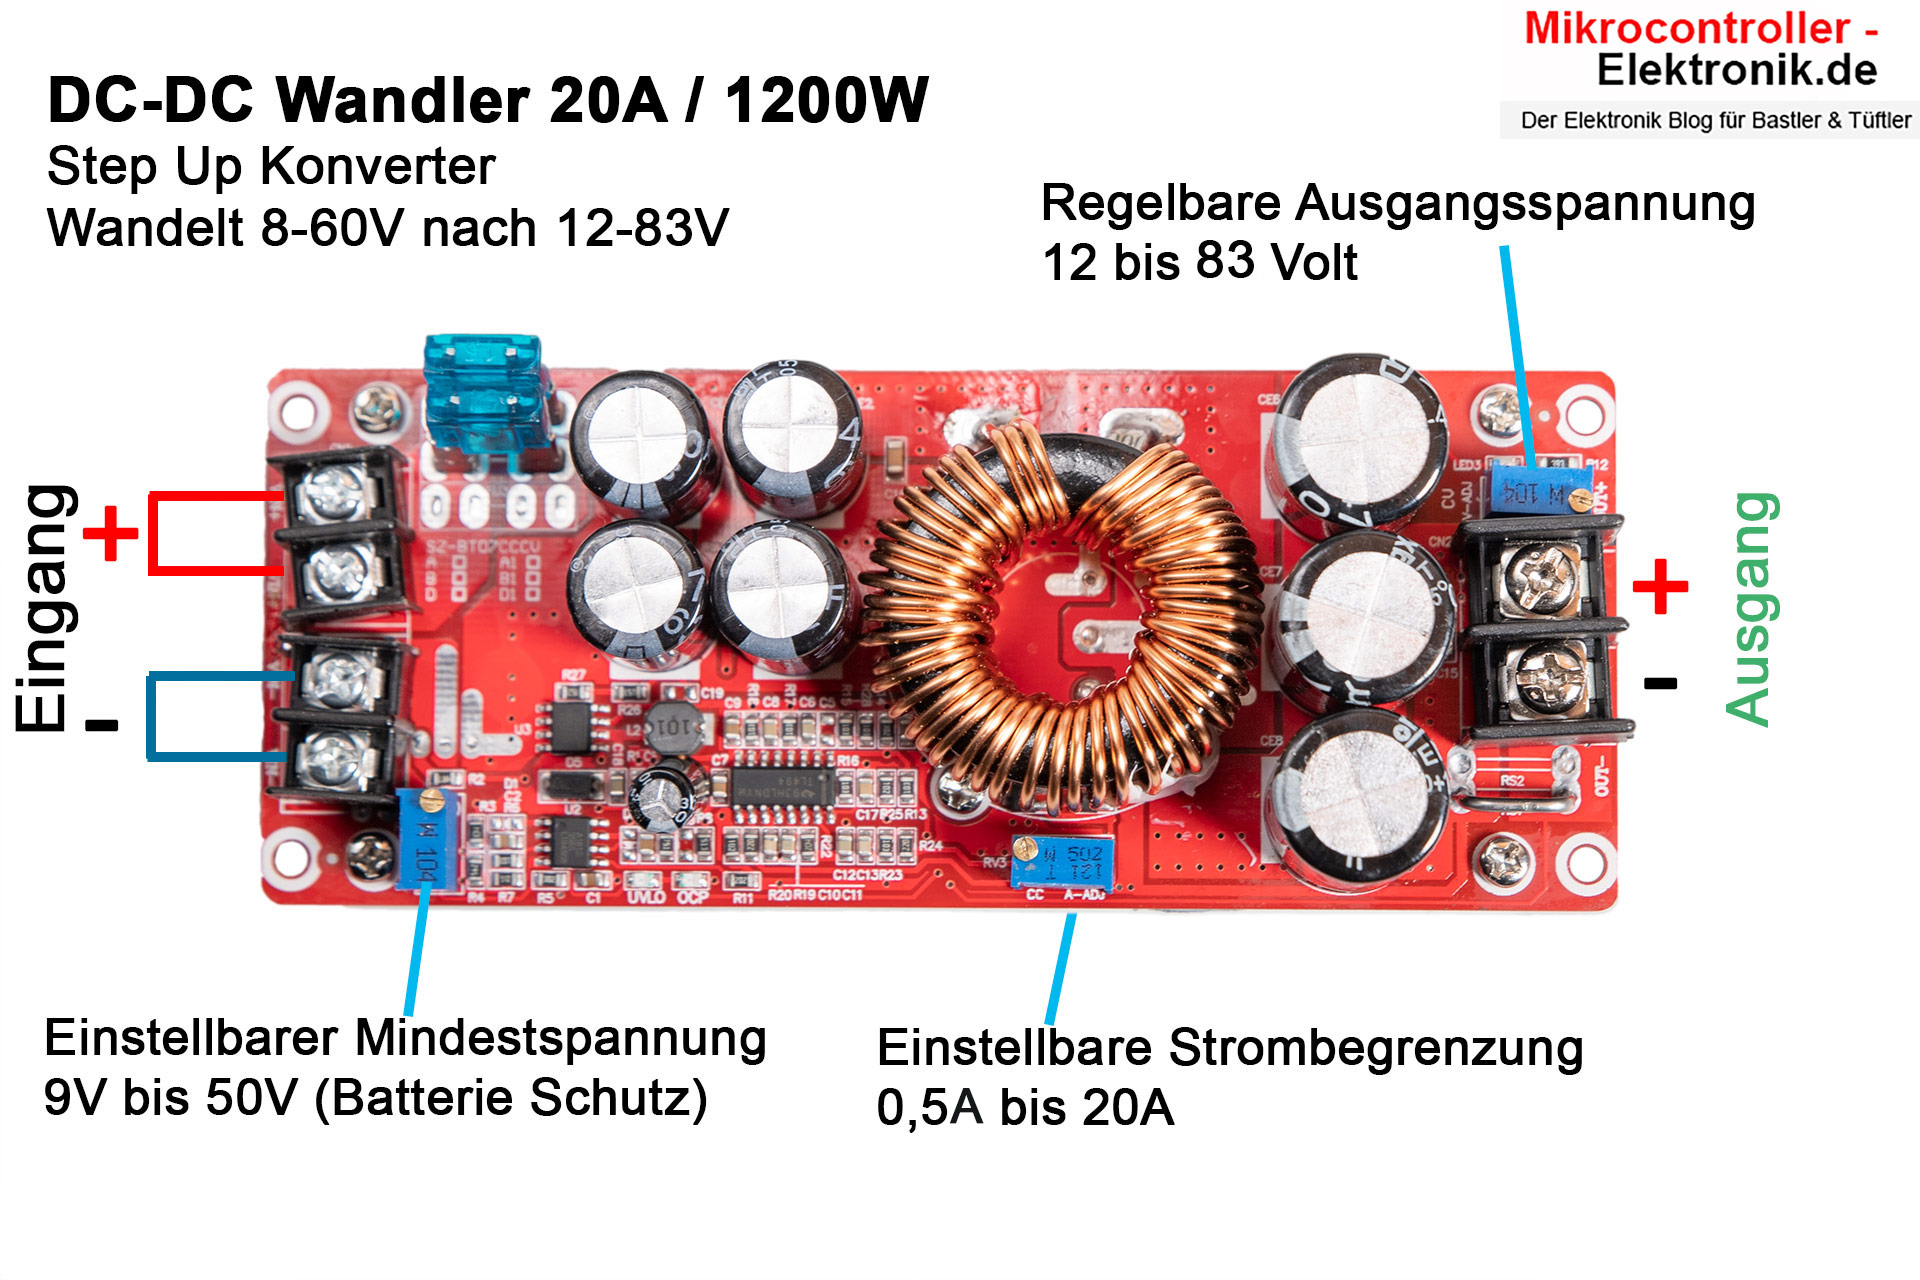 https://www.mikrocontroller-elektronik.de/wp-content/uploads/2021/03/Step-Up-Converter-1200V-20A.jpg